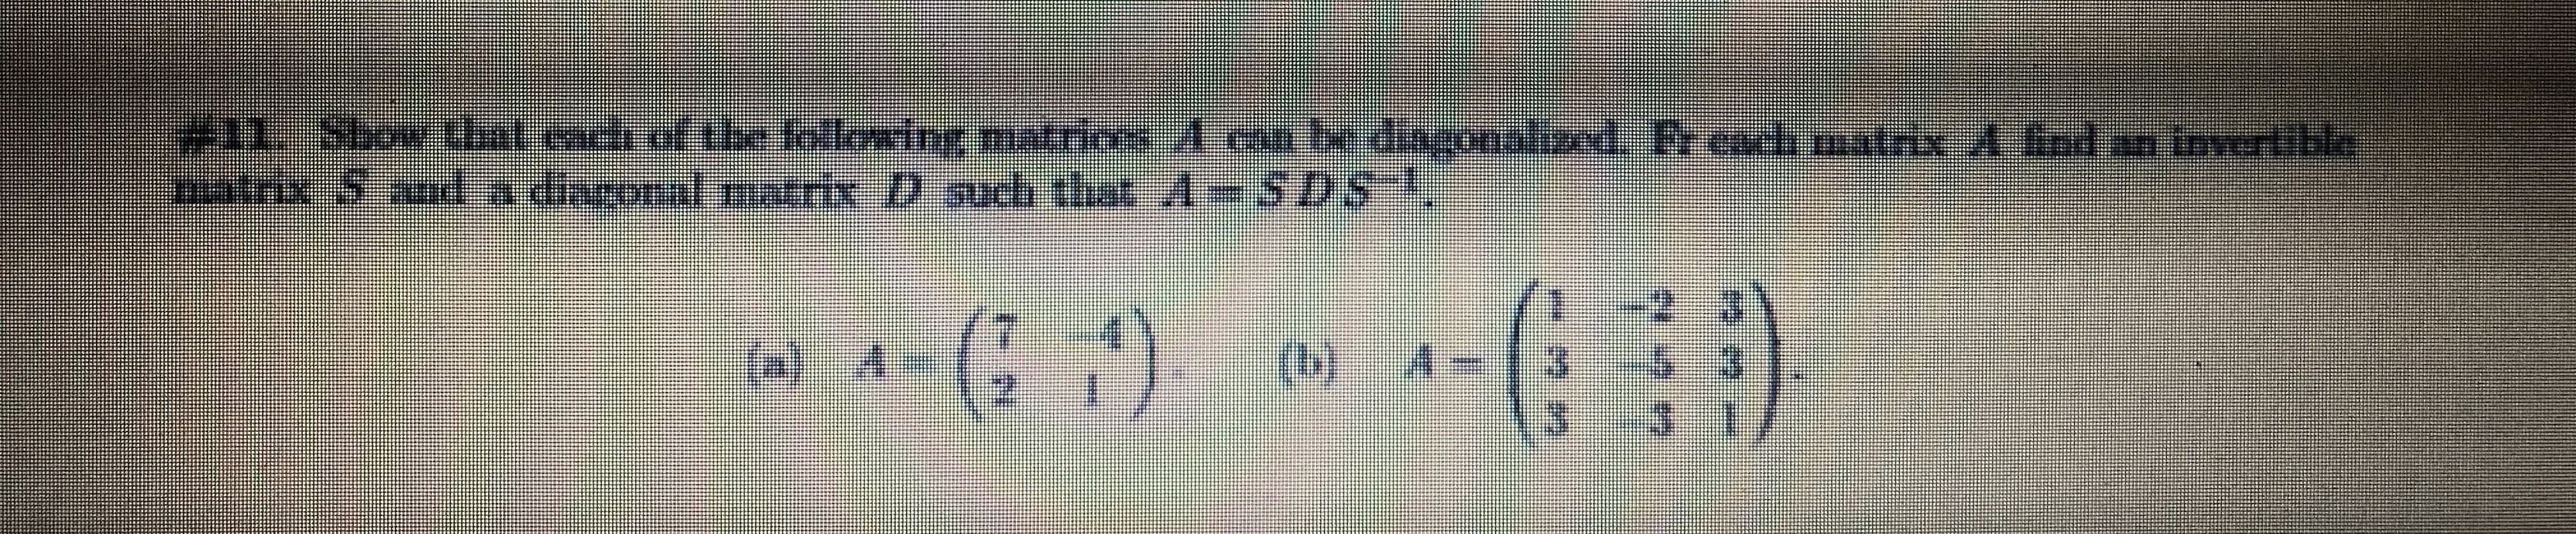 #11 Sbowdal.coch of tbe following matrioes A can be disgonalizxod. Freach mtix A find an invertible
matrix Snda daconal matrix D such that A-SDS
()
(3)
(b)
